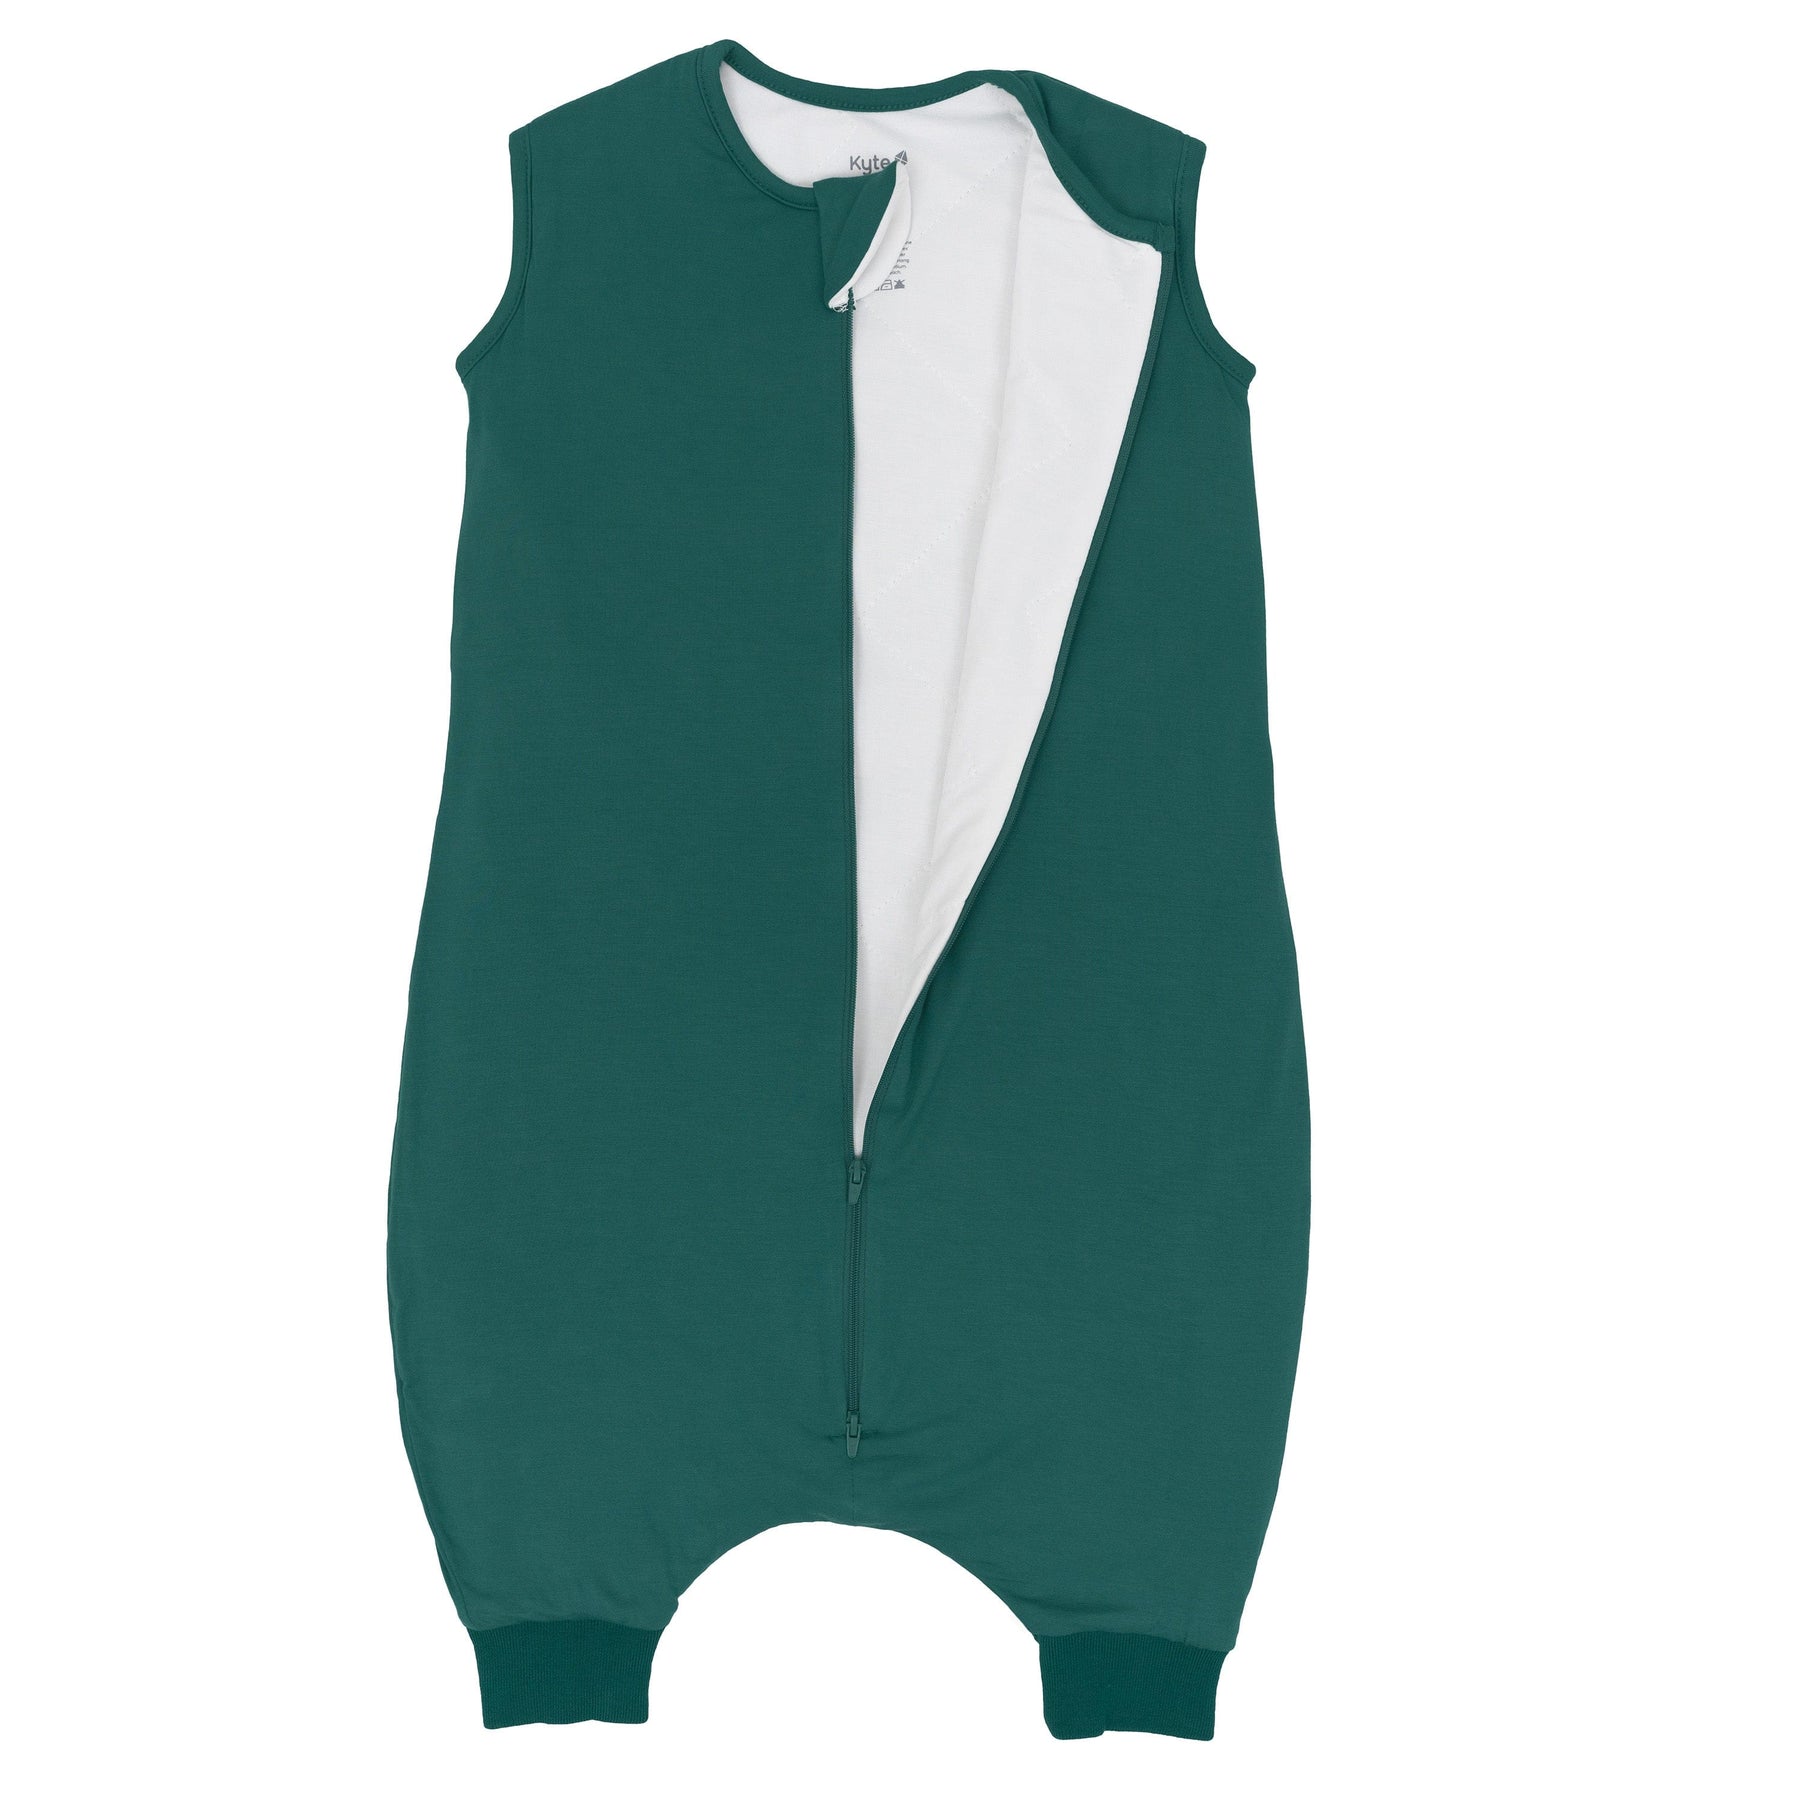 Kyte Baby Sleep Bag Walker in Emerald 1.0 with double zipper